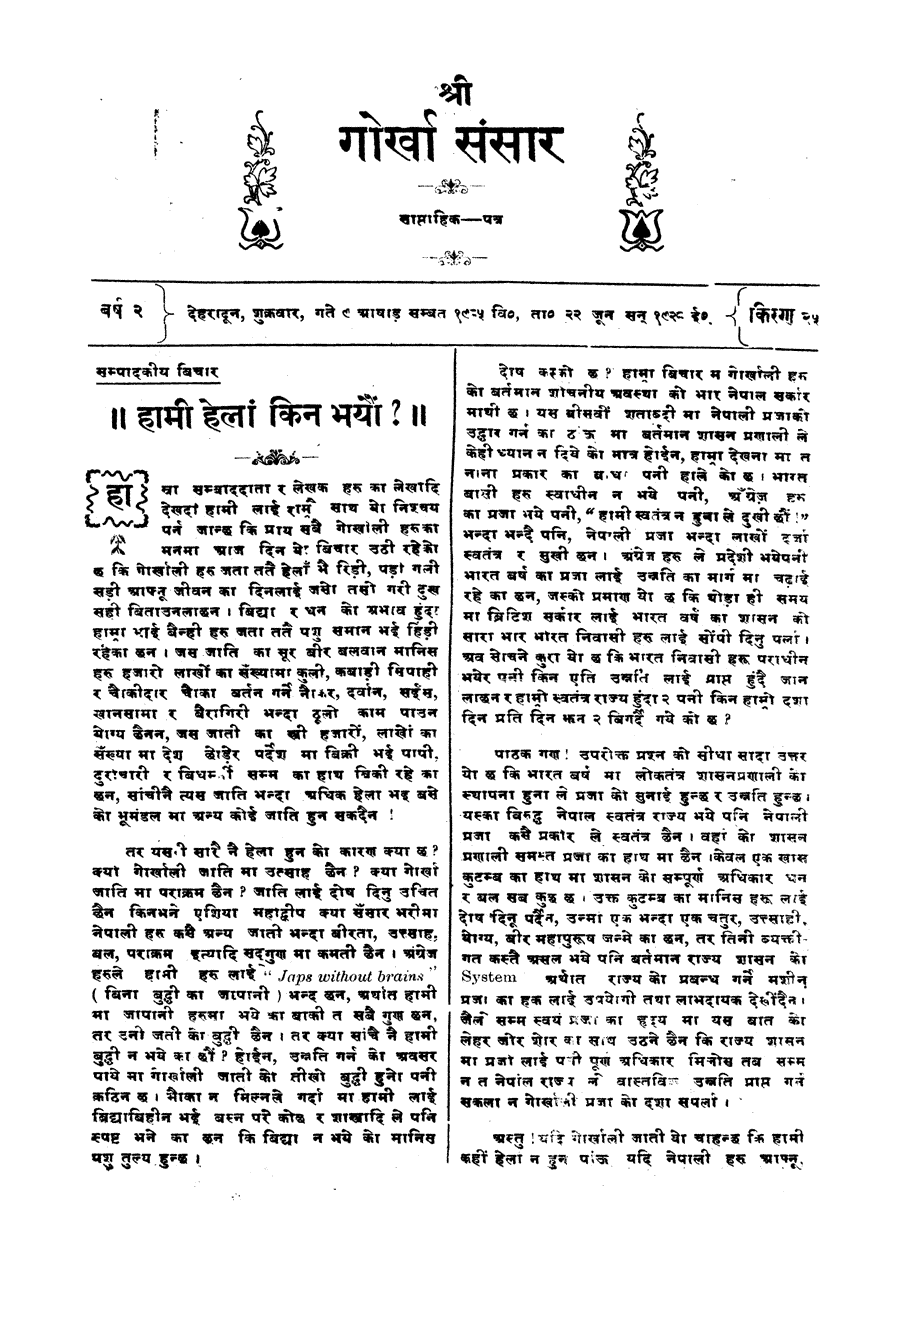 Gorkha Sansar, 22 June 1928, page 7